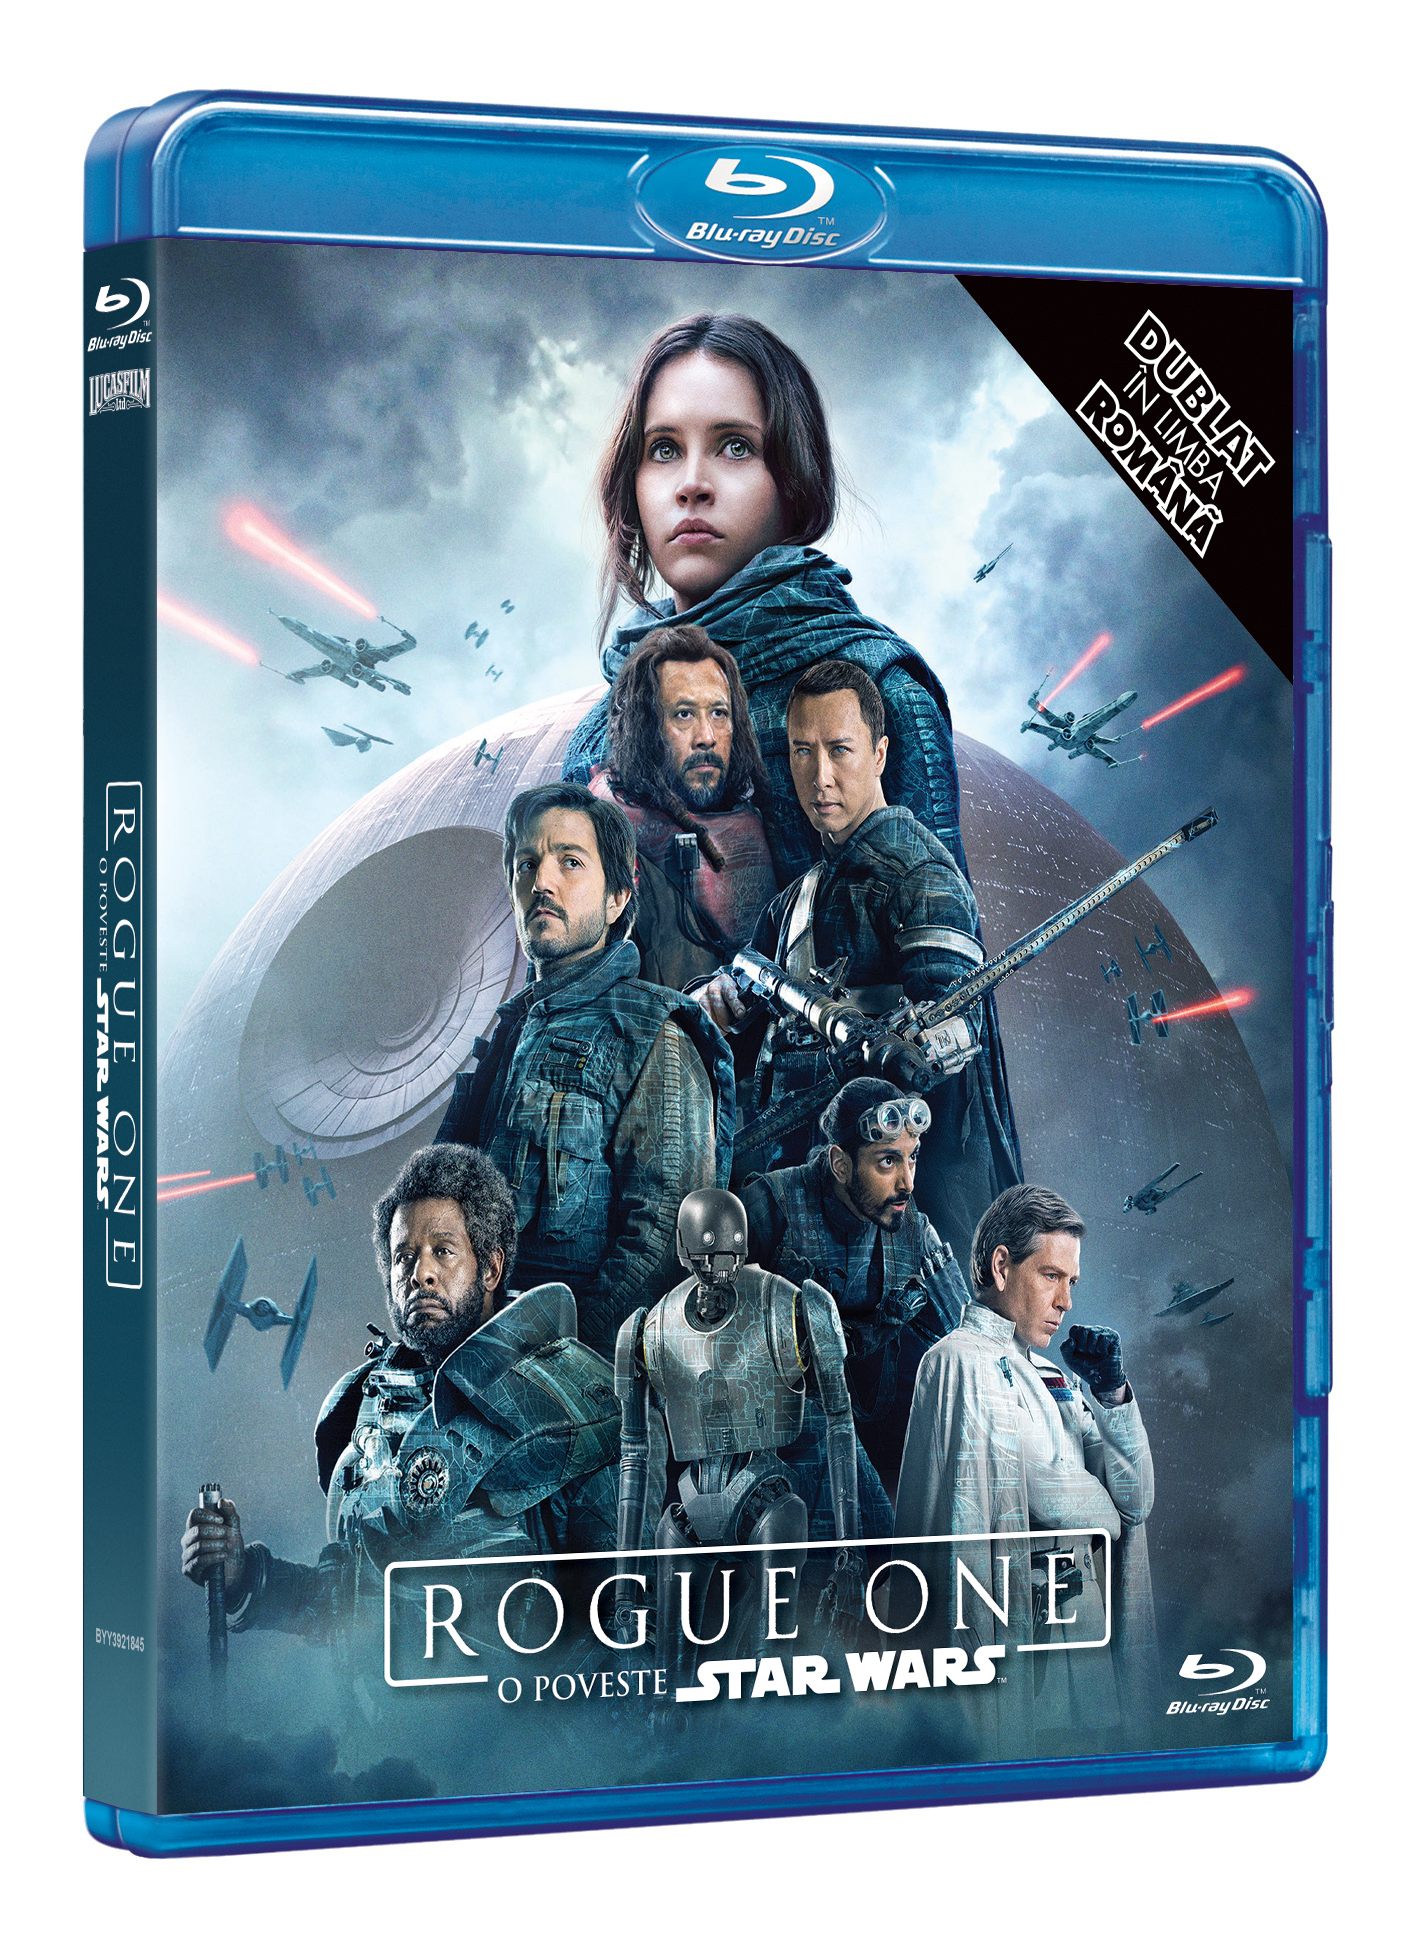 Rogue One: O poveste Star Wars (Blu Ray Disc) / Rogue One | Gareth Edwards